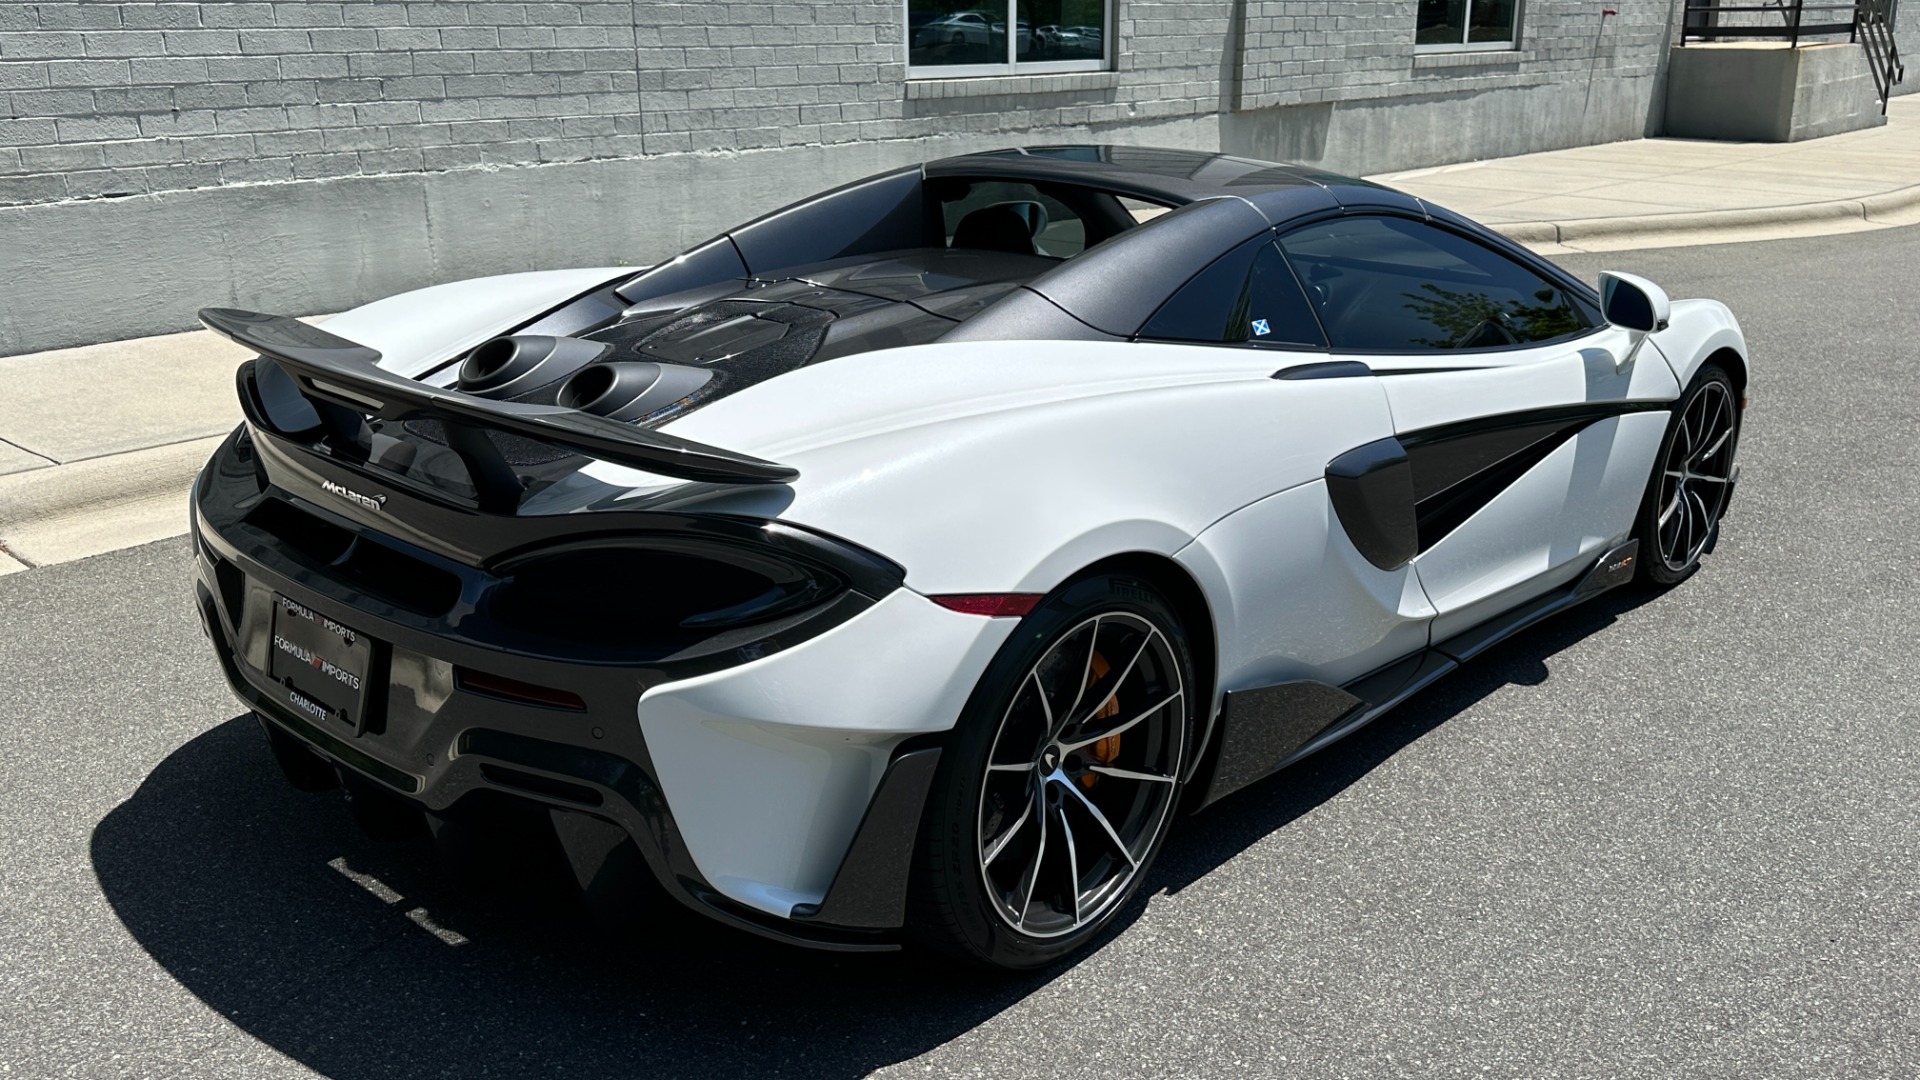 Used 2020 McLaren 600LT SPIDER / FRONT PPF / LEATHER INT / MSO BELTS / CARBON FIBER INT for sale $295,000 at Formula Imports in Charlotte NC 28227 8